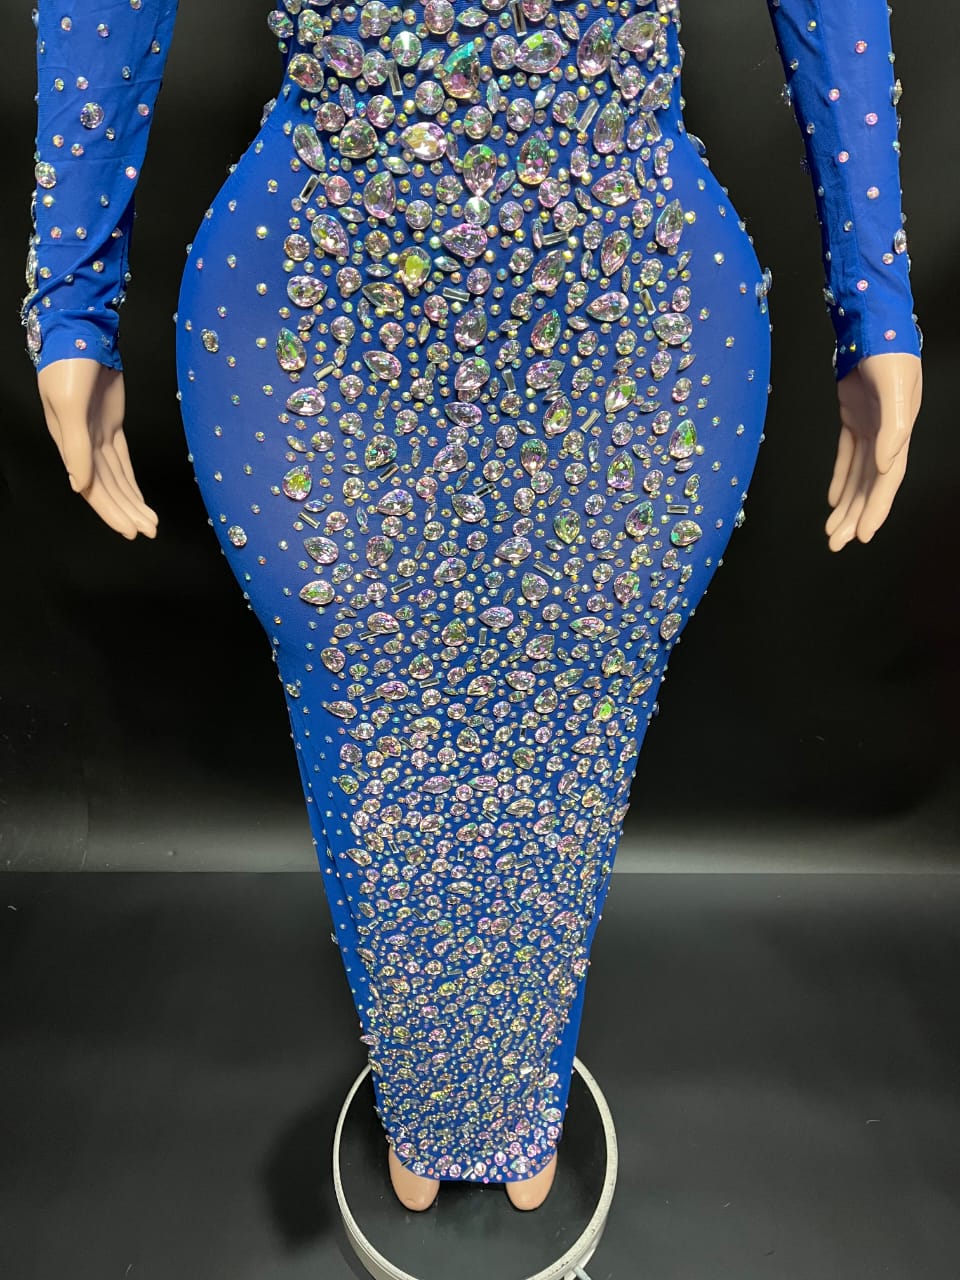 Ms HollyWood Blue Iridescent Diamond Stone Glam Dress